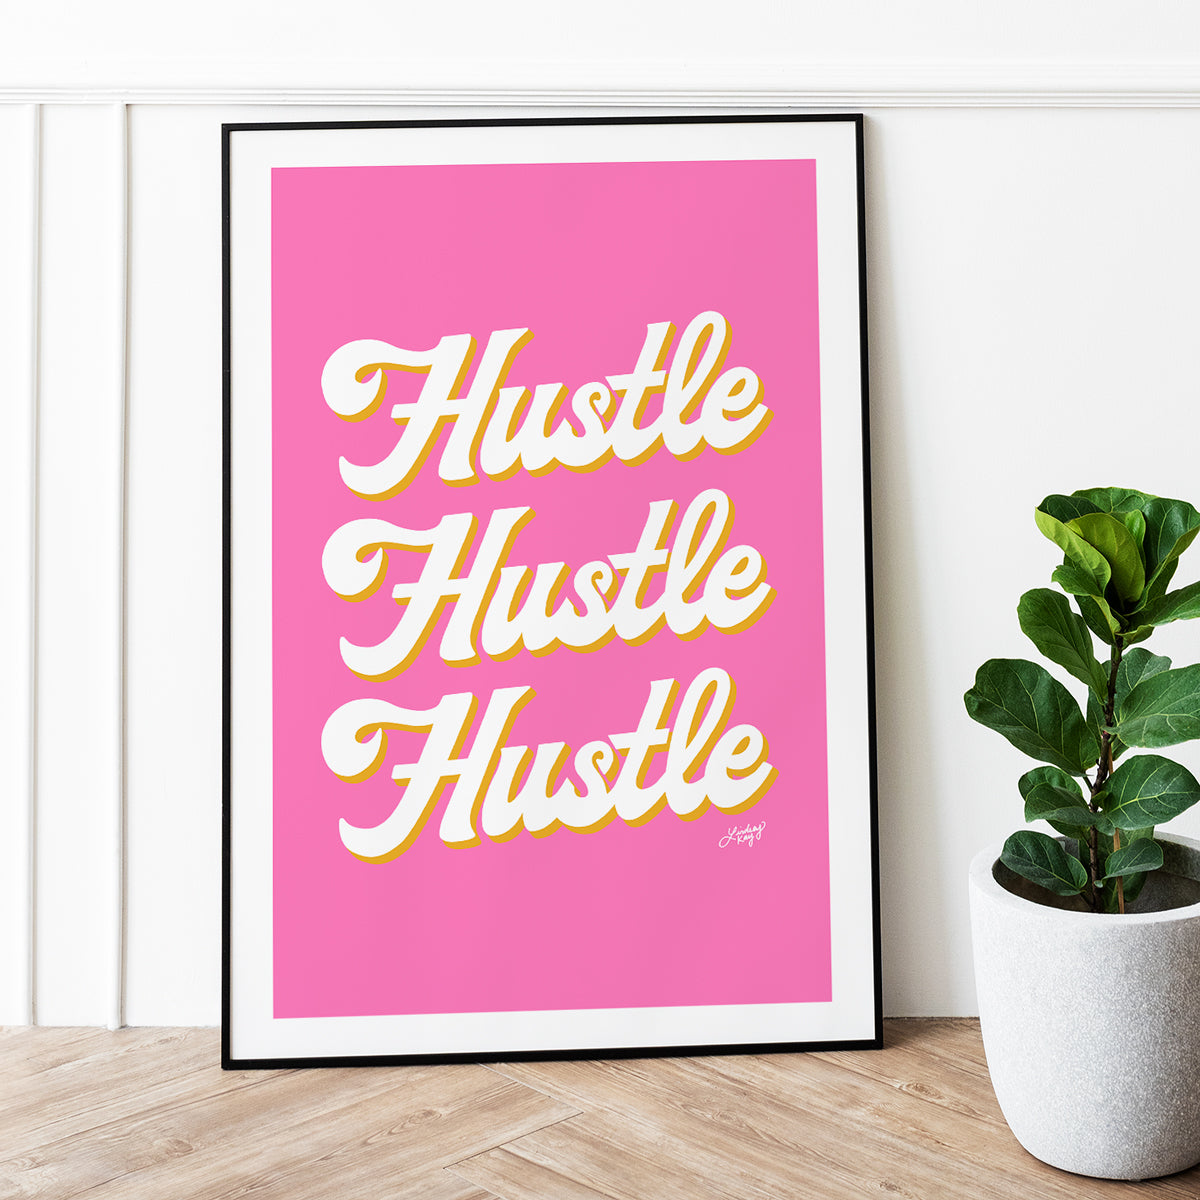 Hustle Hustle Hustle (Pink/Orange Palette) - Art Print